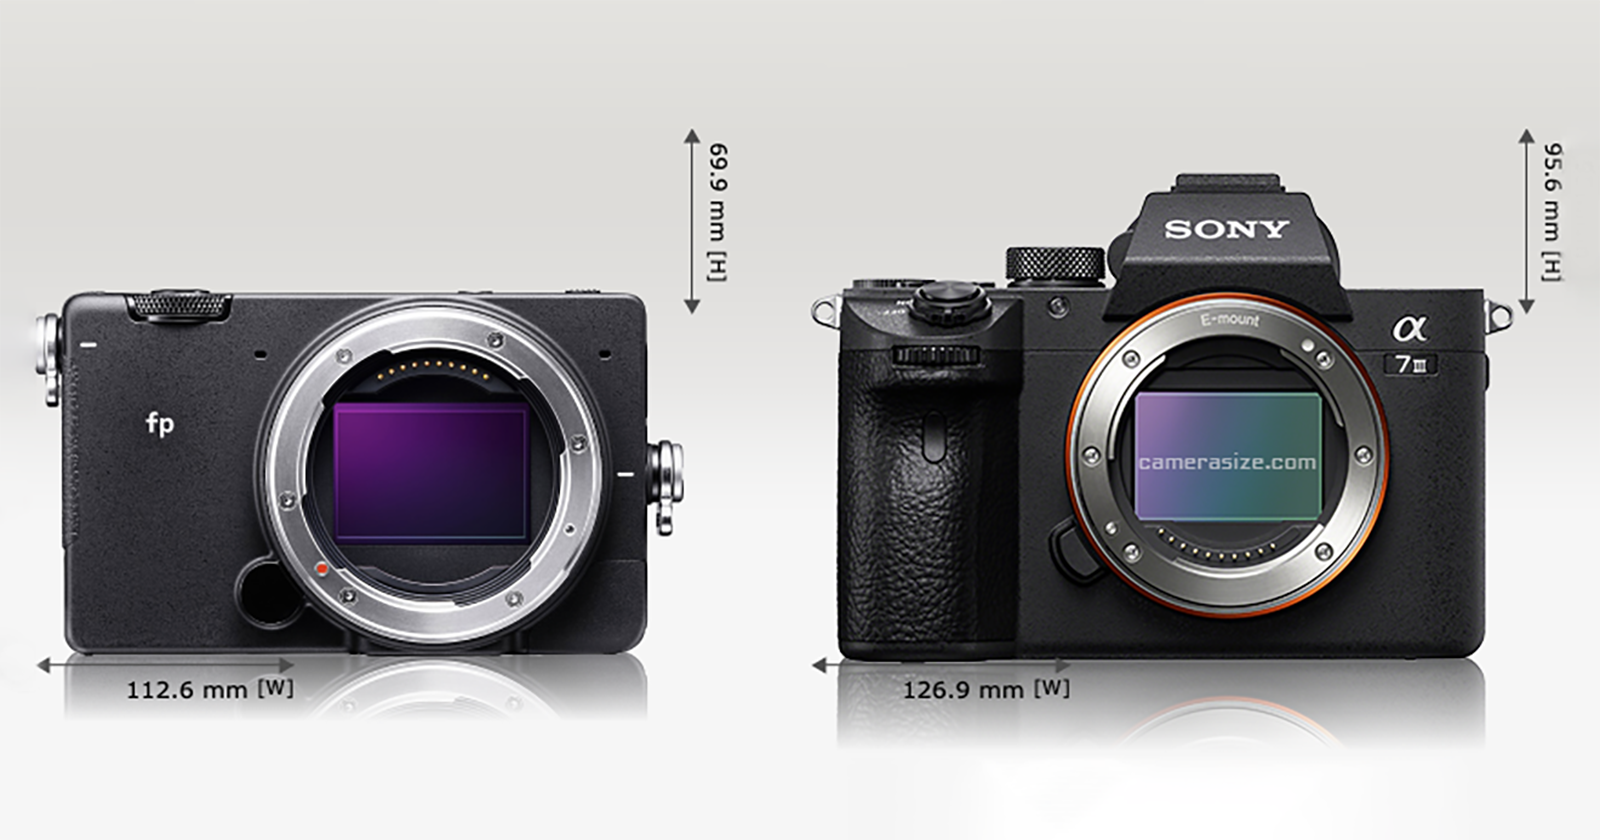 Kaal handboeien Marine Size Comparison: Sigma fp vs Sony, Nikon, Canon and Panasonic | PetaPixel